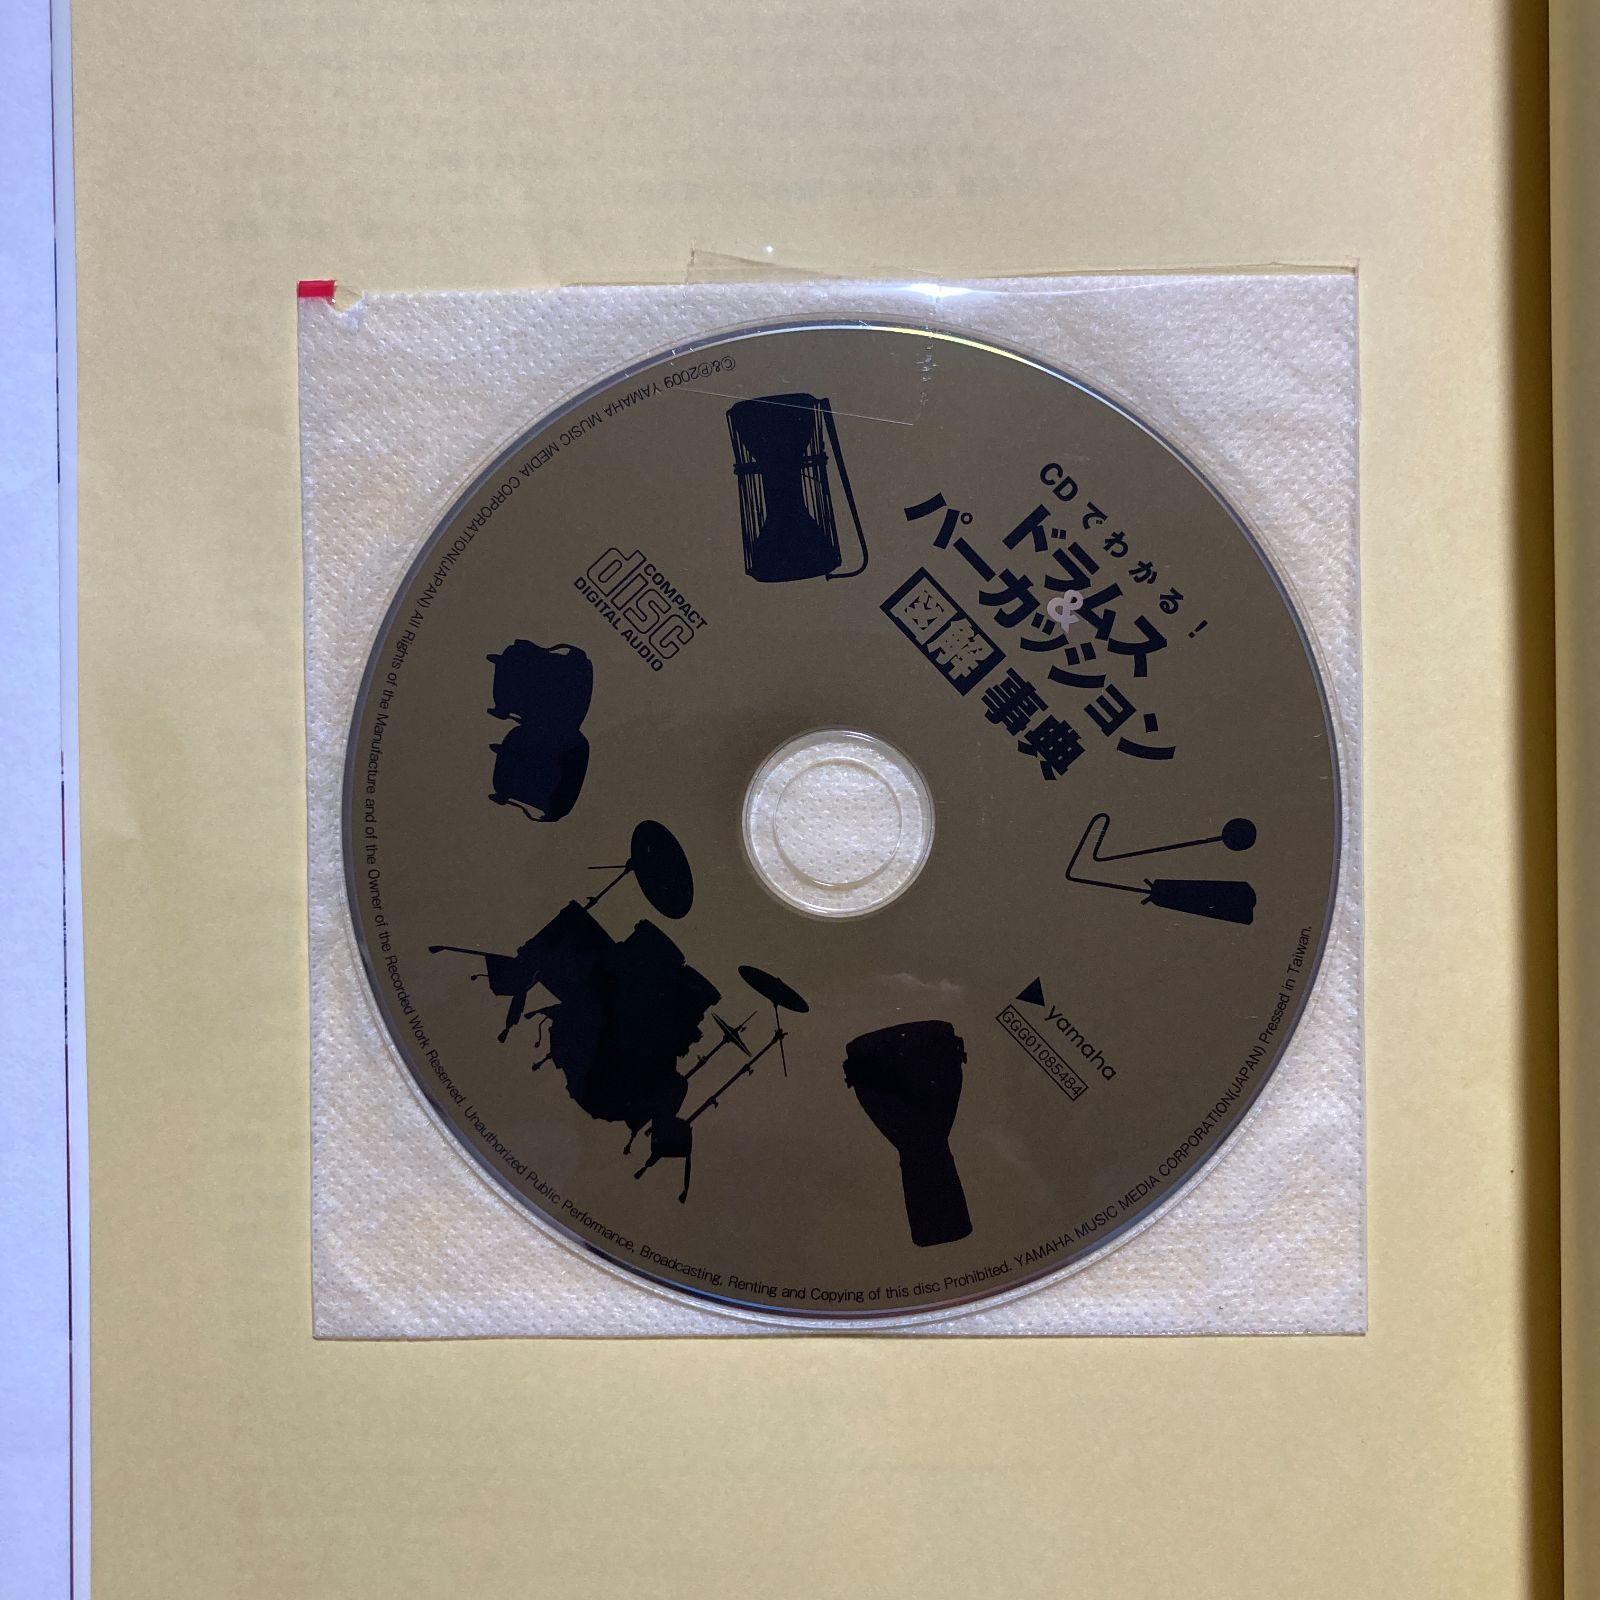 CDでわかる ドラムス&パーカッション 図解事典 / 山村 牧人